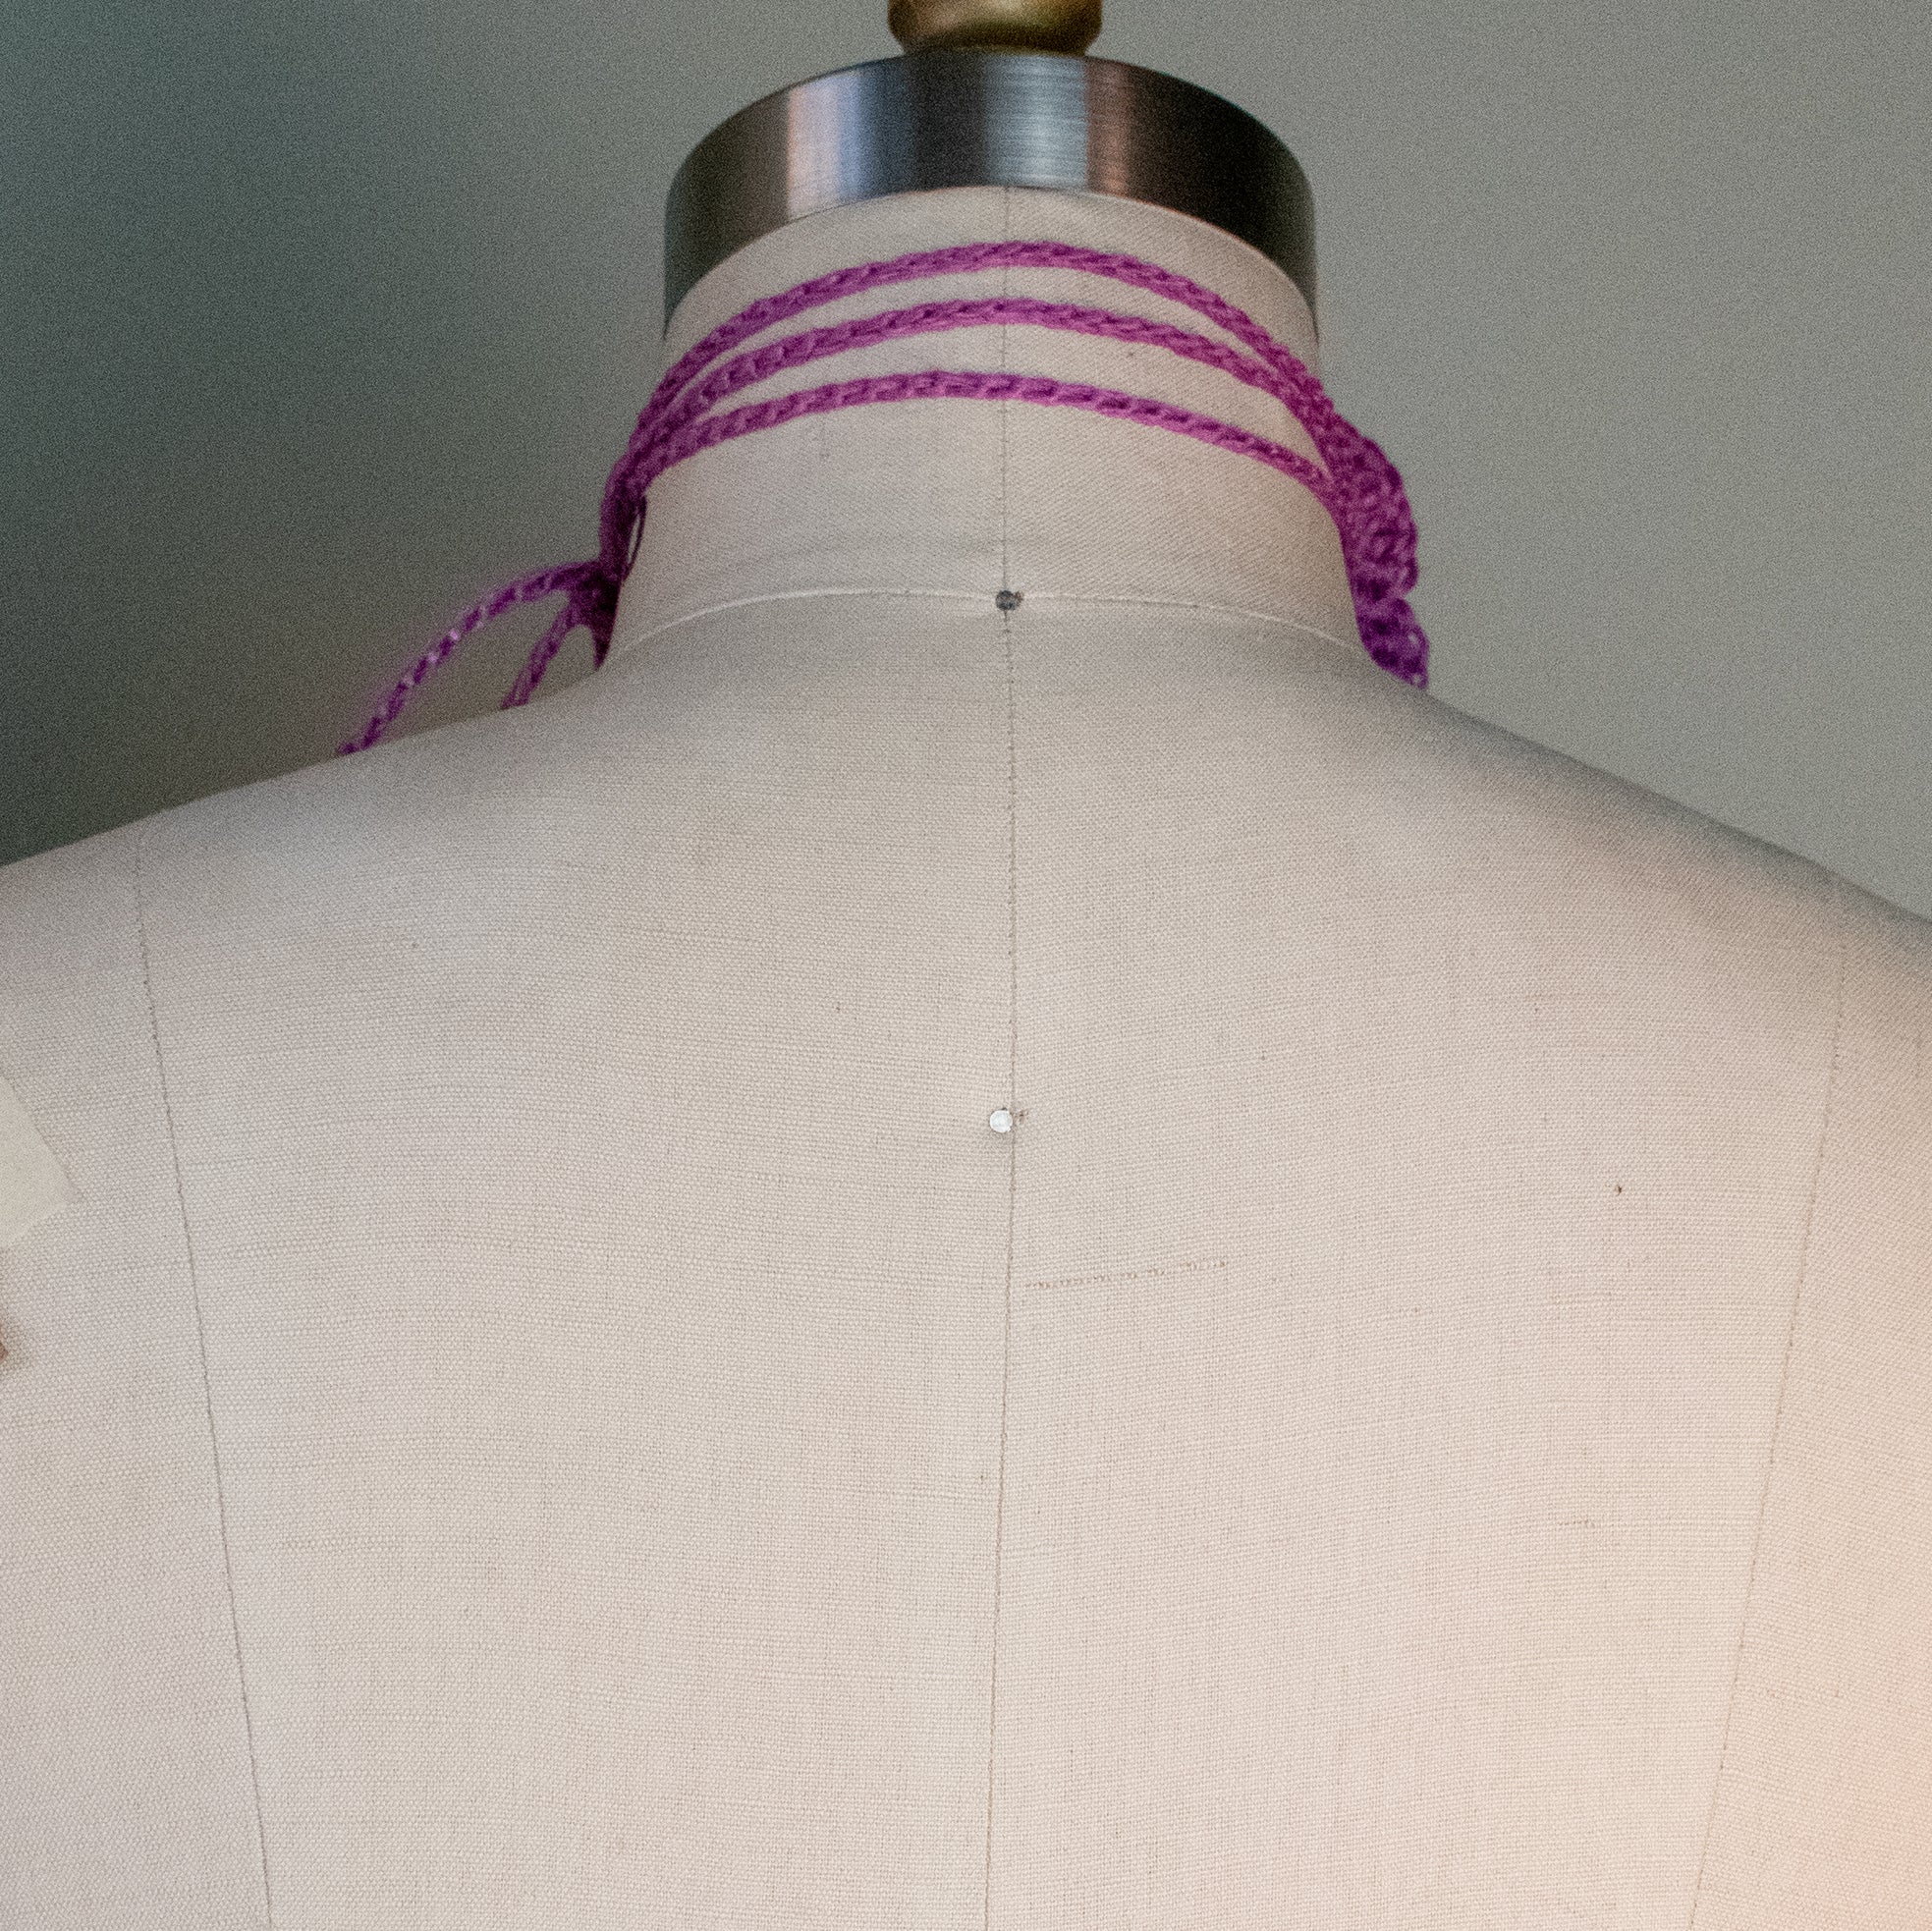 Crochet Beaded Rose Necklace Wrap in Magenta